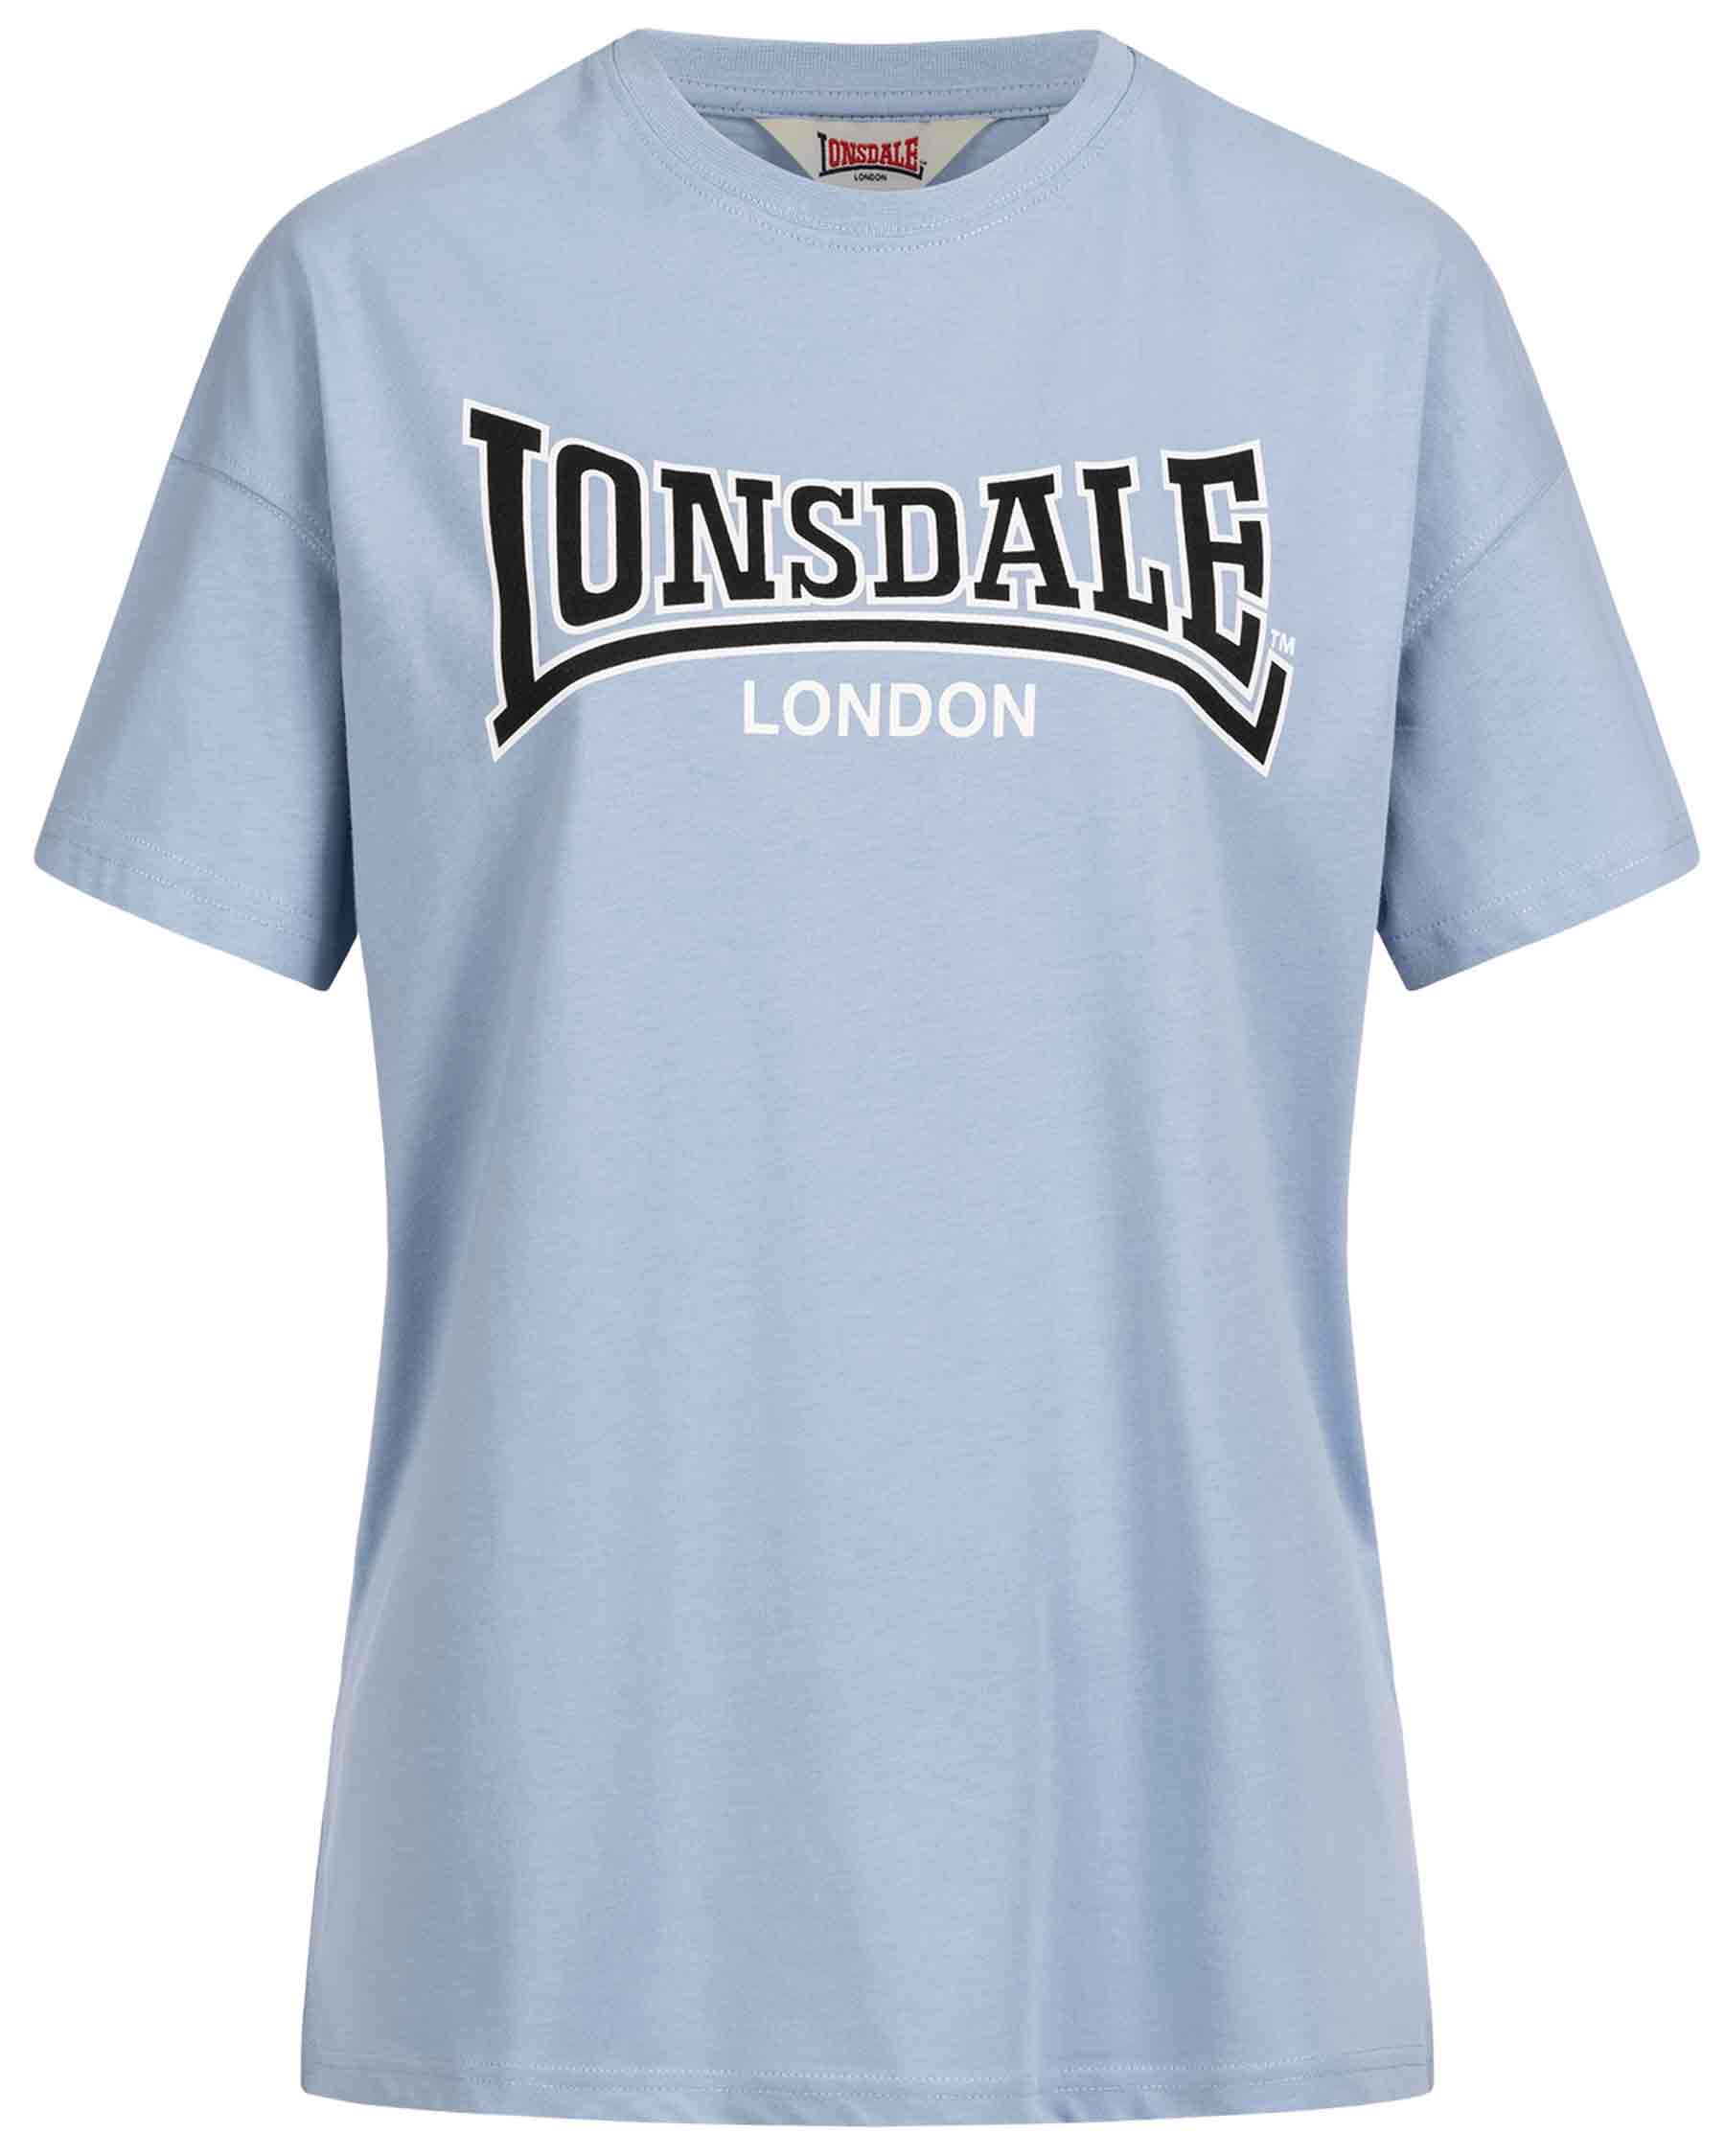 muis of rat Storen Kolonisten Lonsdale ladies loosefit t-shirt Ousdale - Dames T-Shirts - Lonsdale London